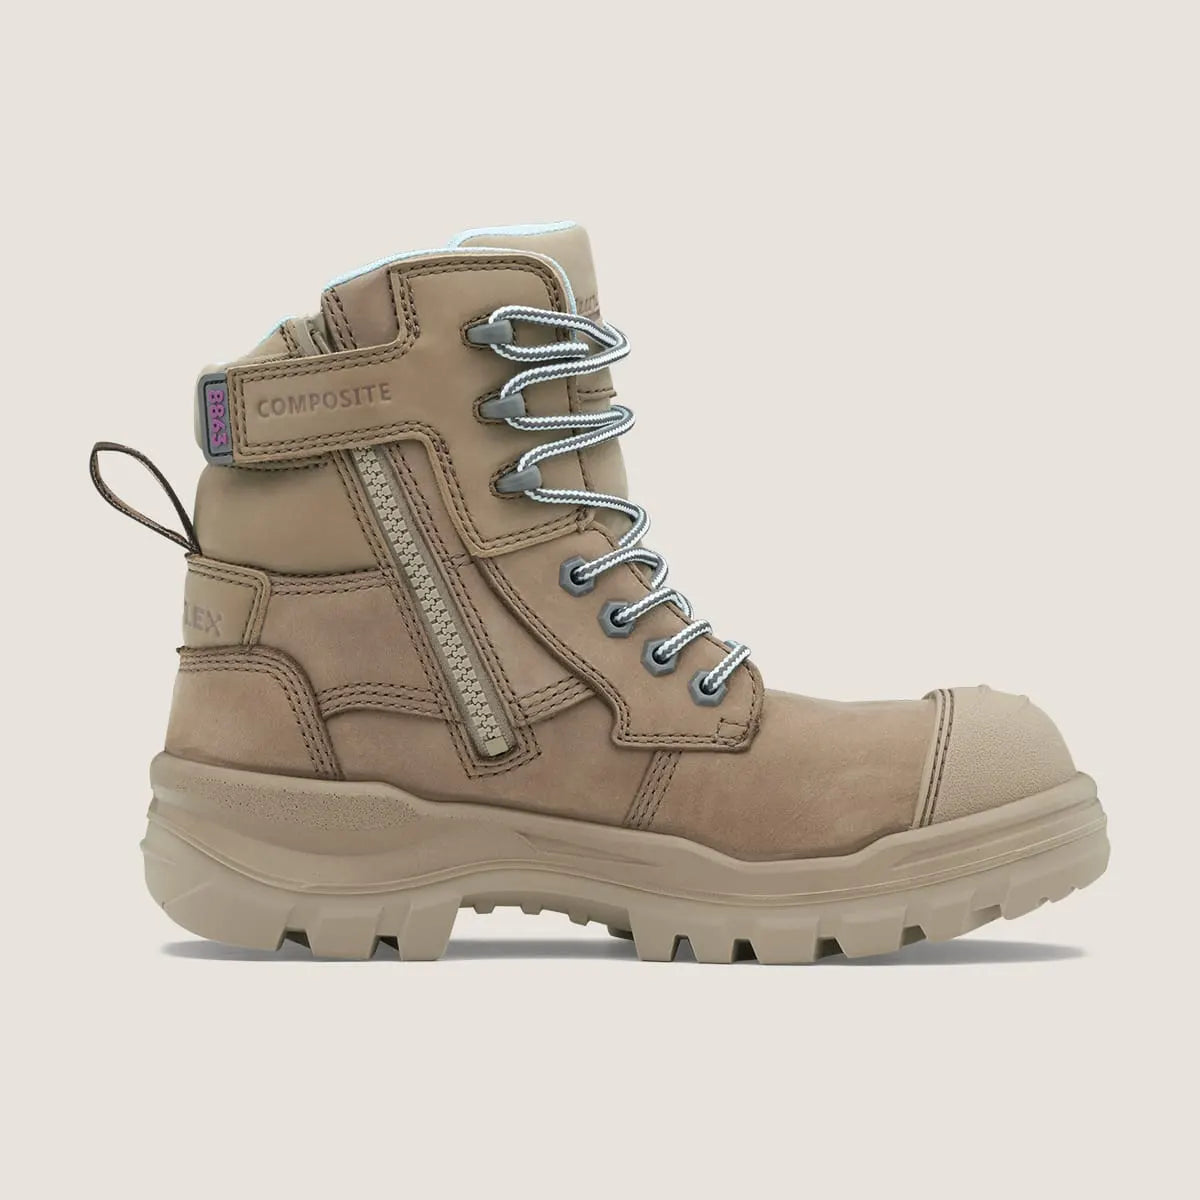 Blundstone 8863 Women’s Rotoflex Safety Boots-Stone